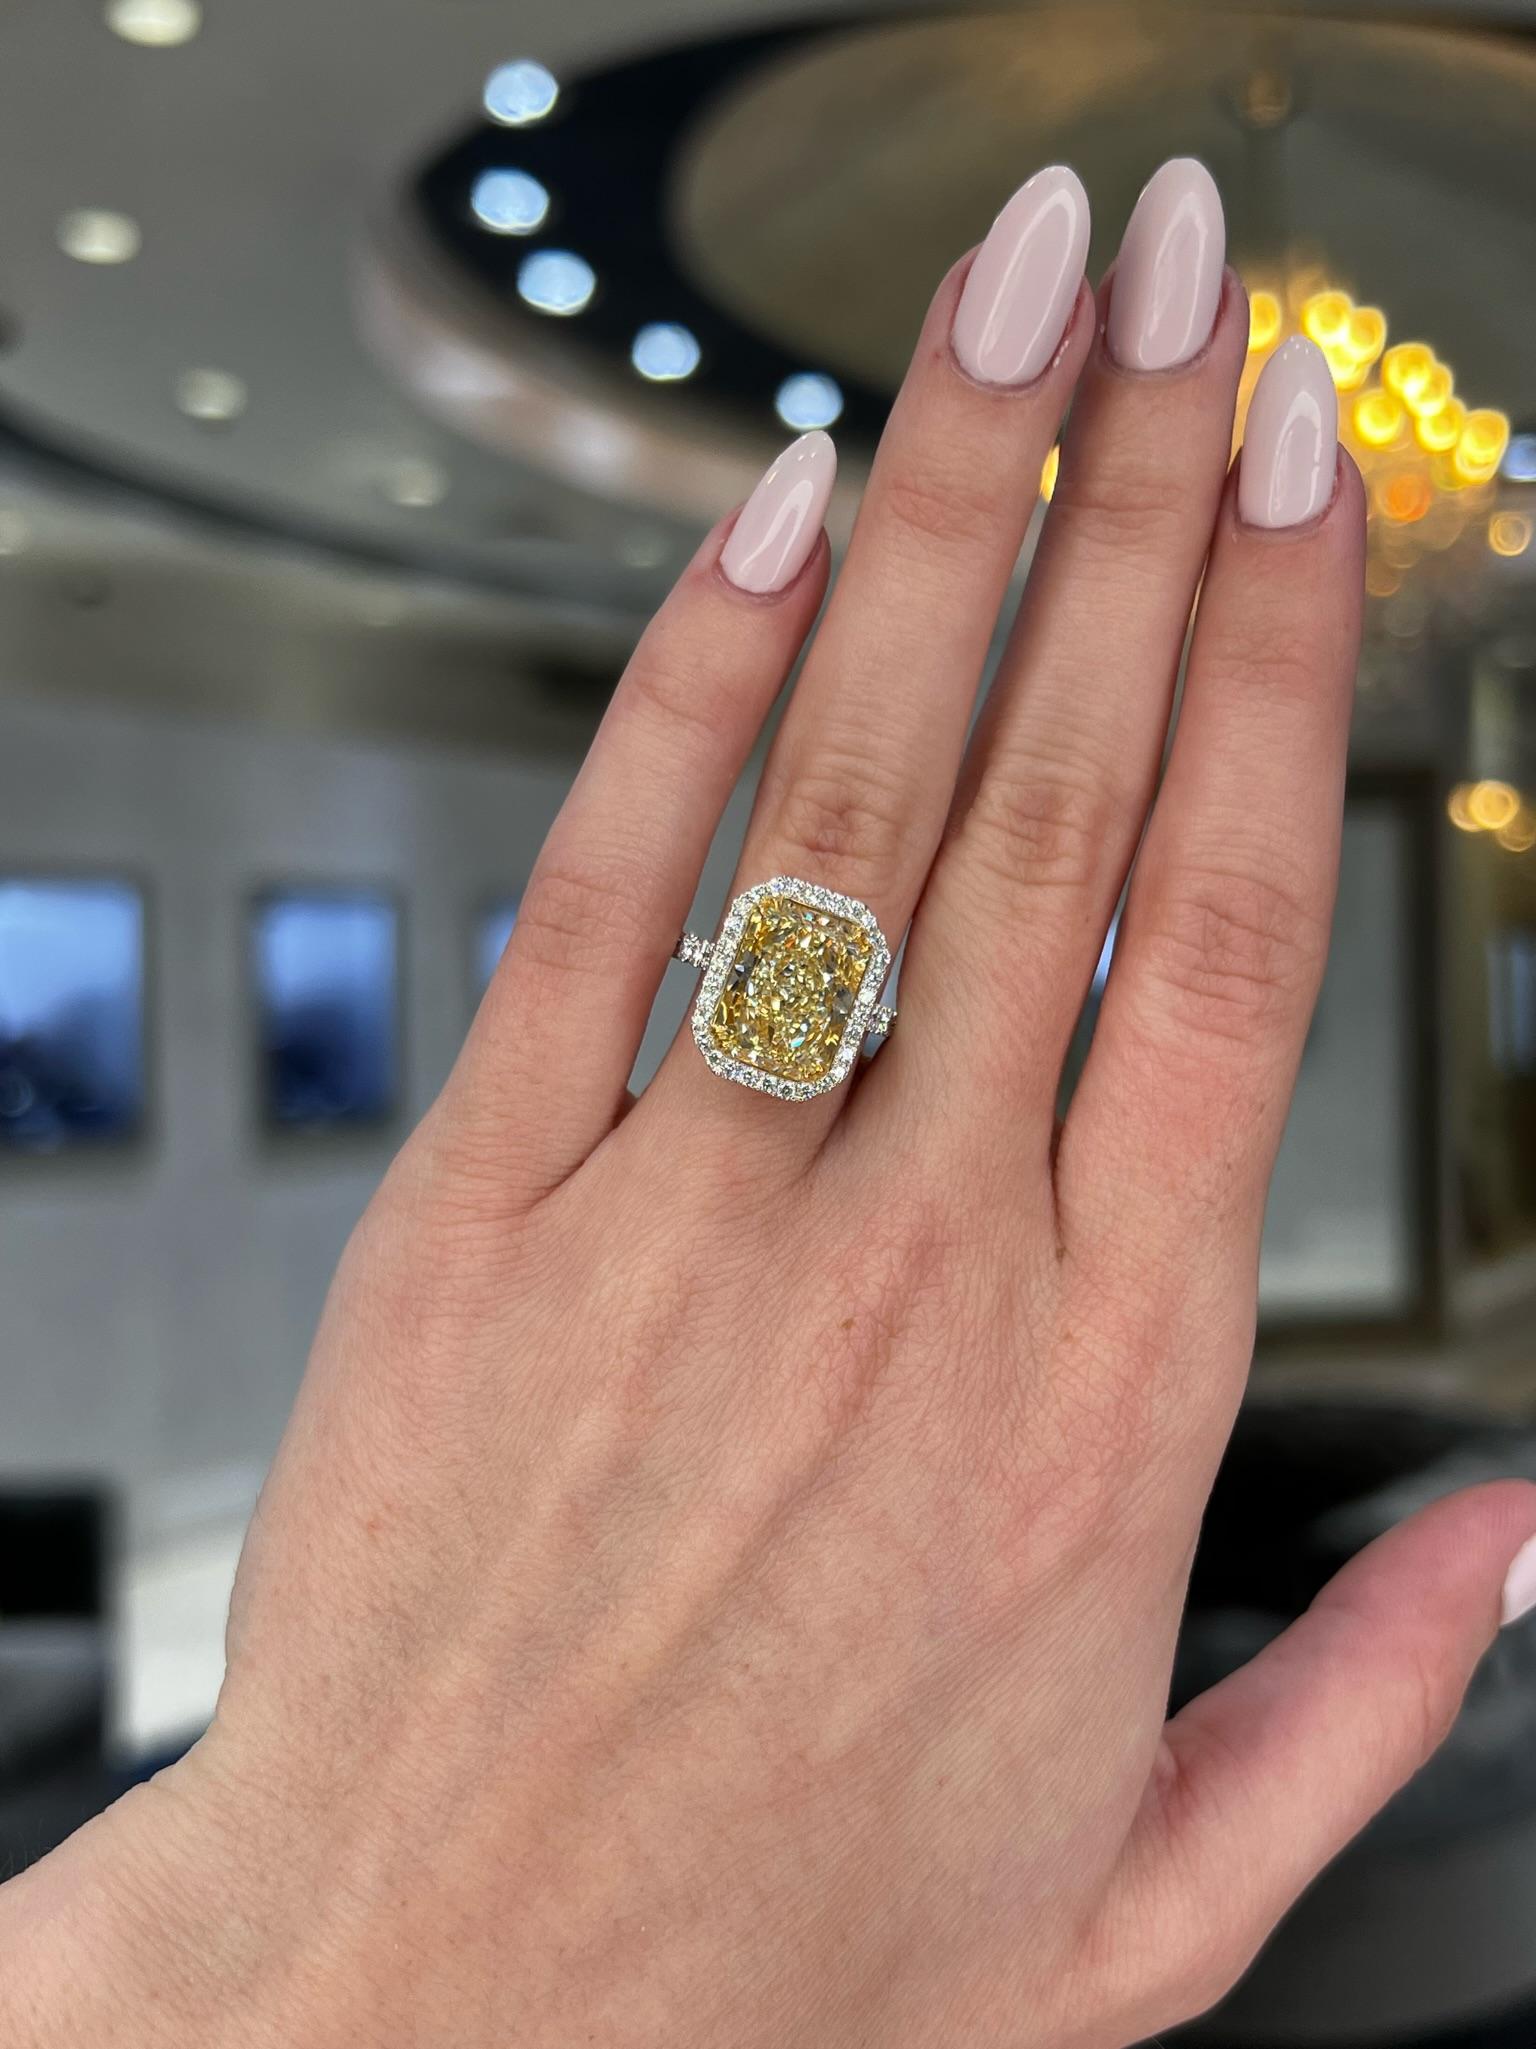 David Rosenberg 6.54 Ct Radiant Light Yellow GIA Diamond Engagement Ring For Sale 7